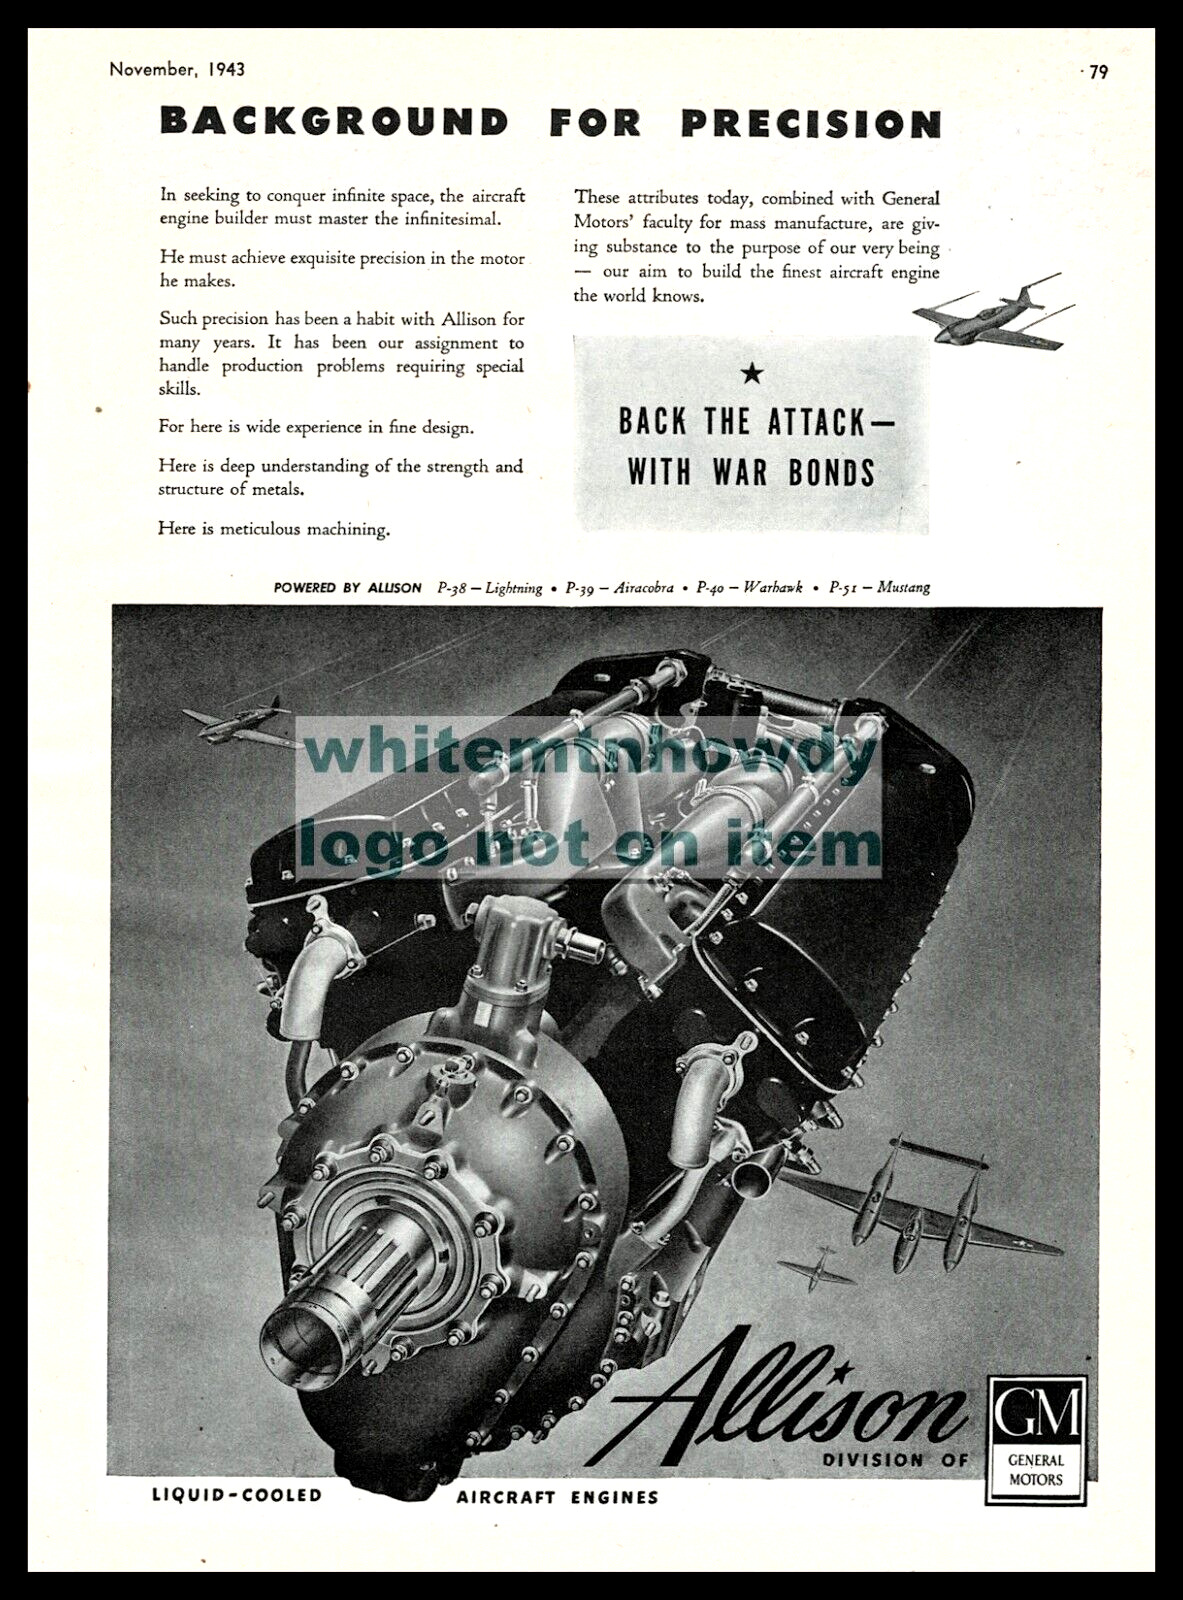 1943 WWII ALLISON Aircraft Engine Wartime General Motors Av iation AD